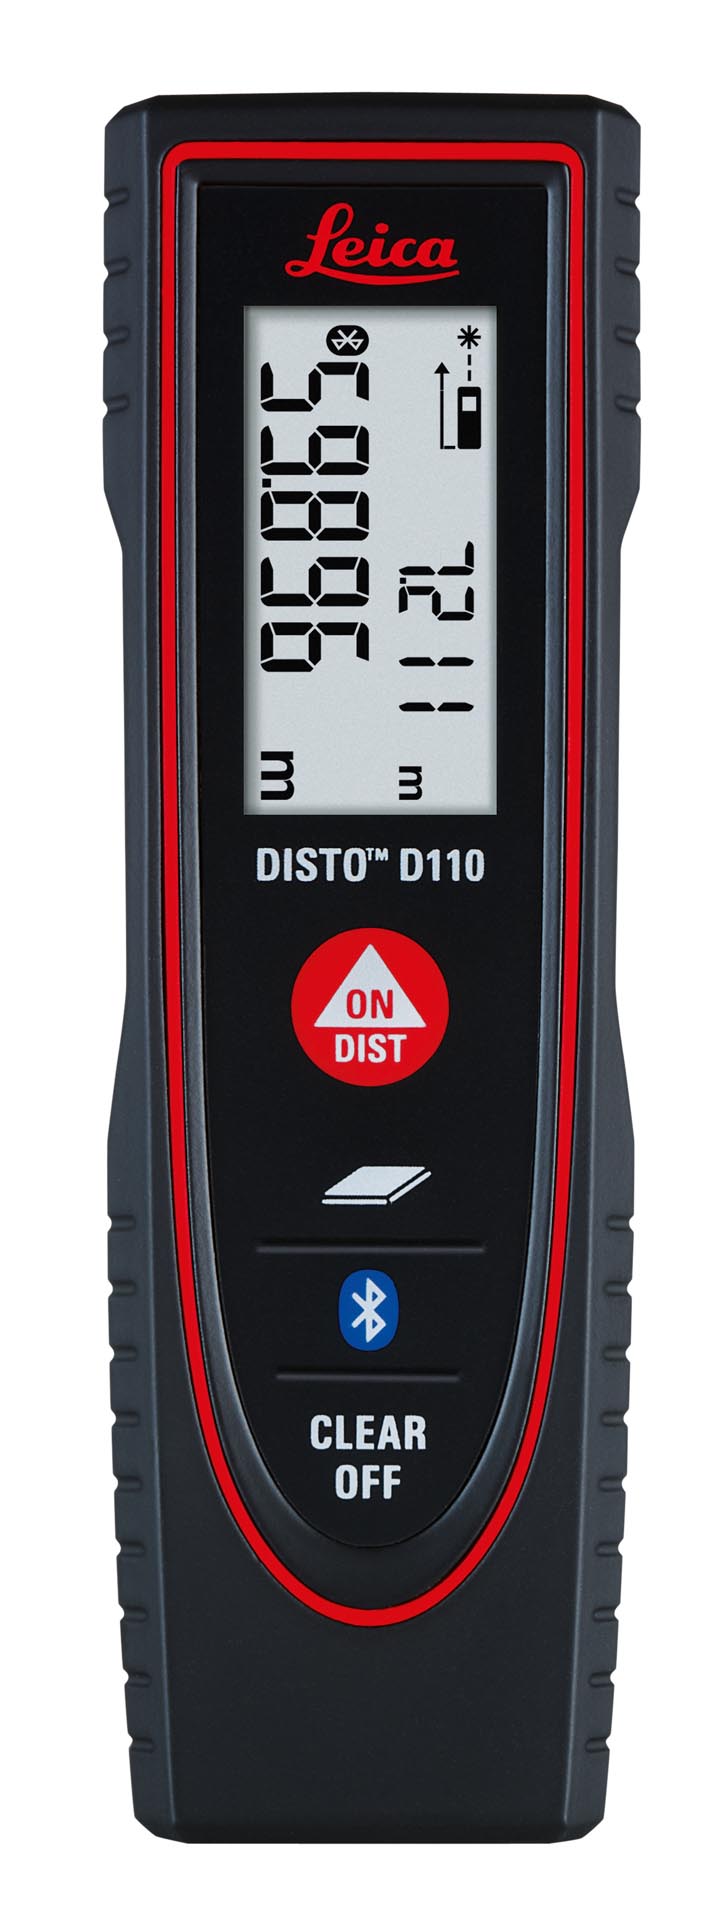 DISTO™ D110 mit Bluetooth